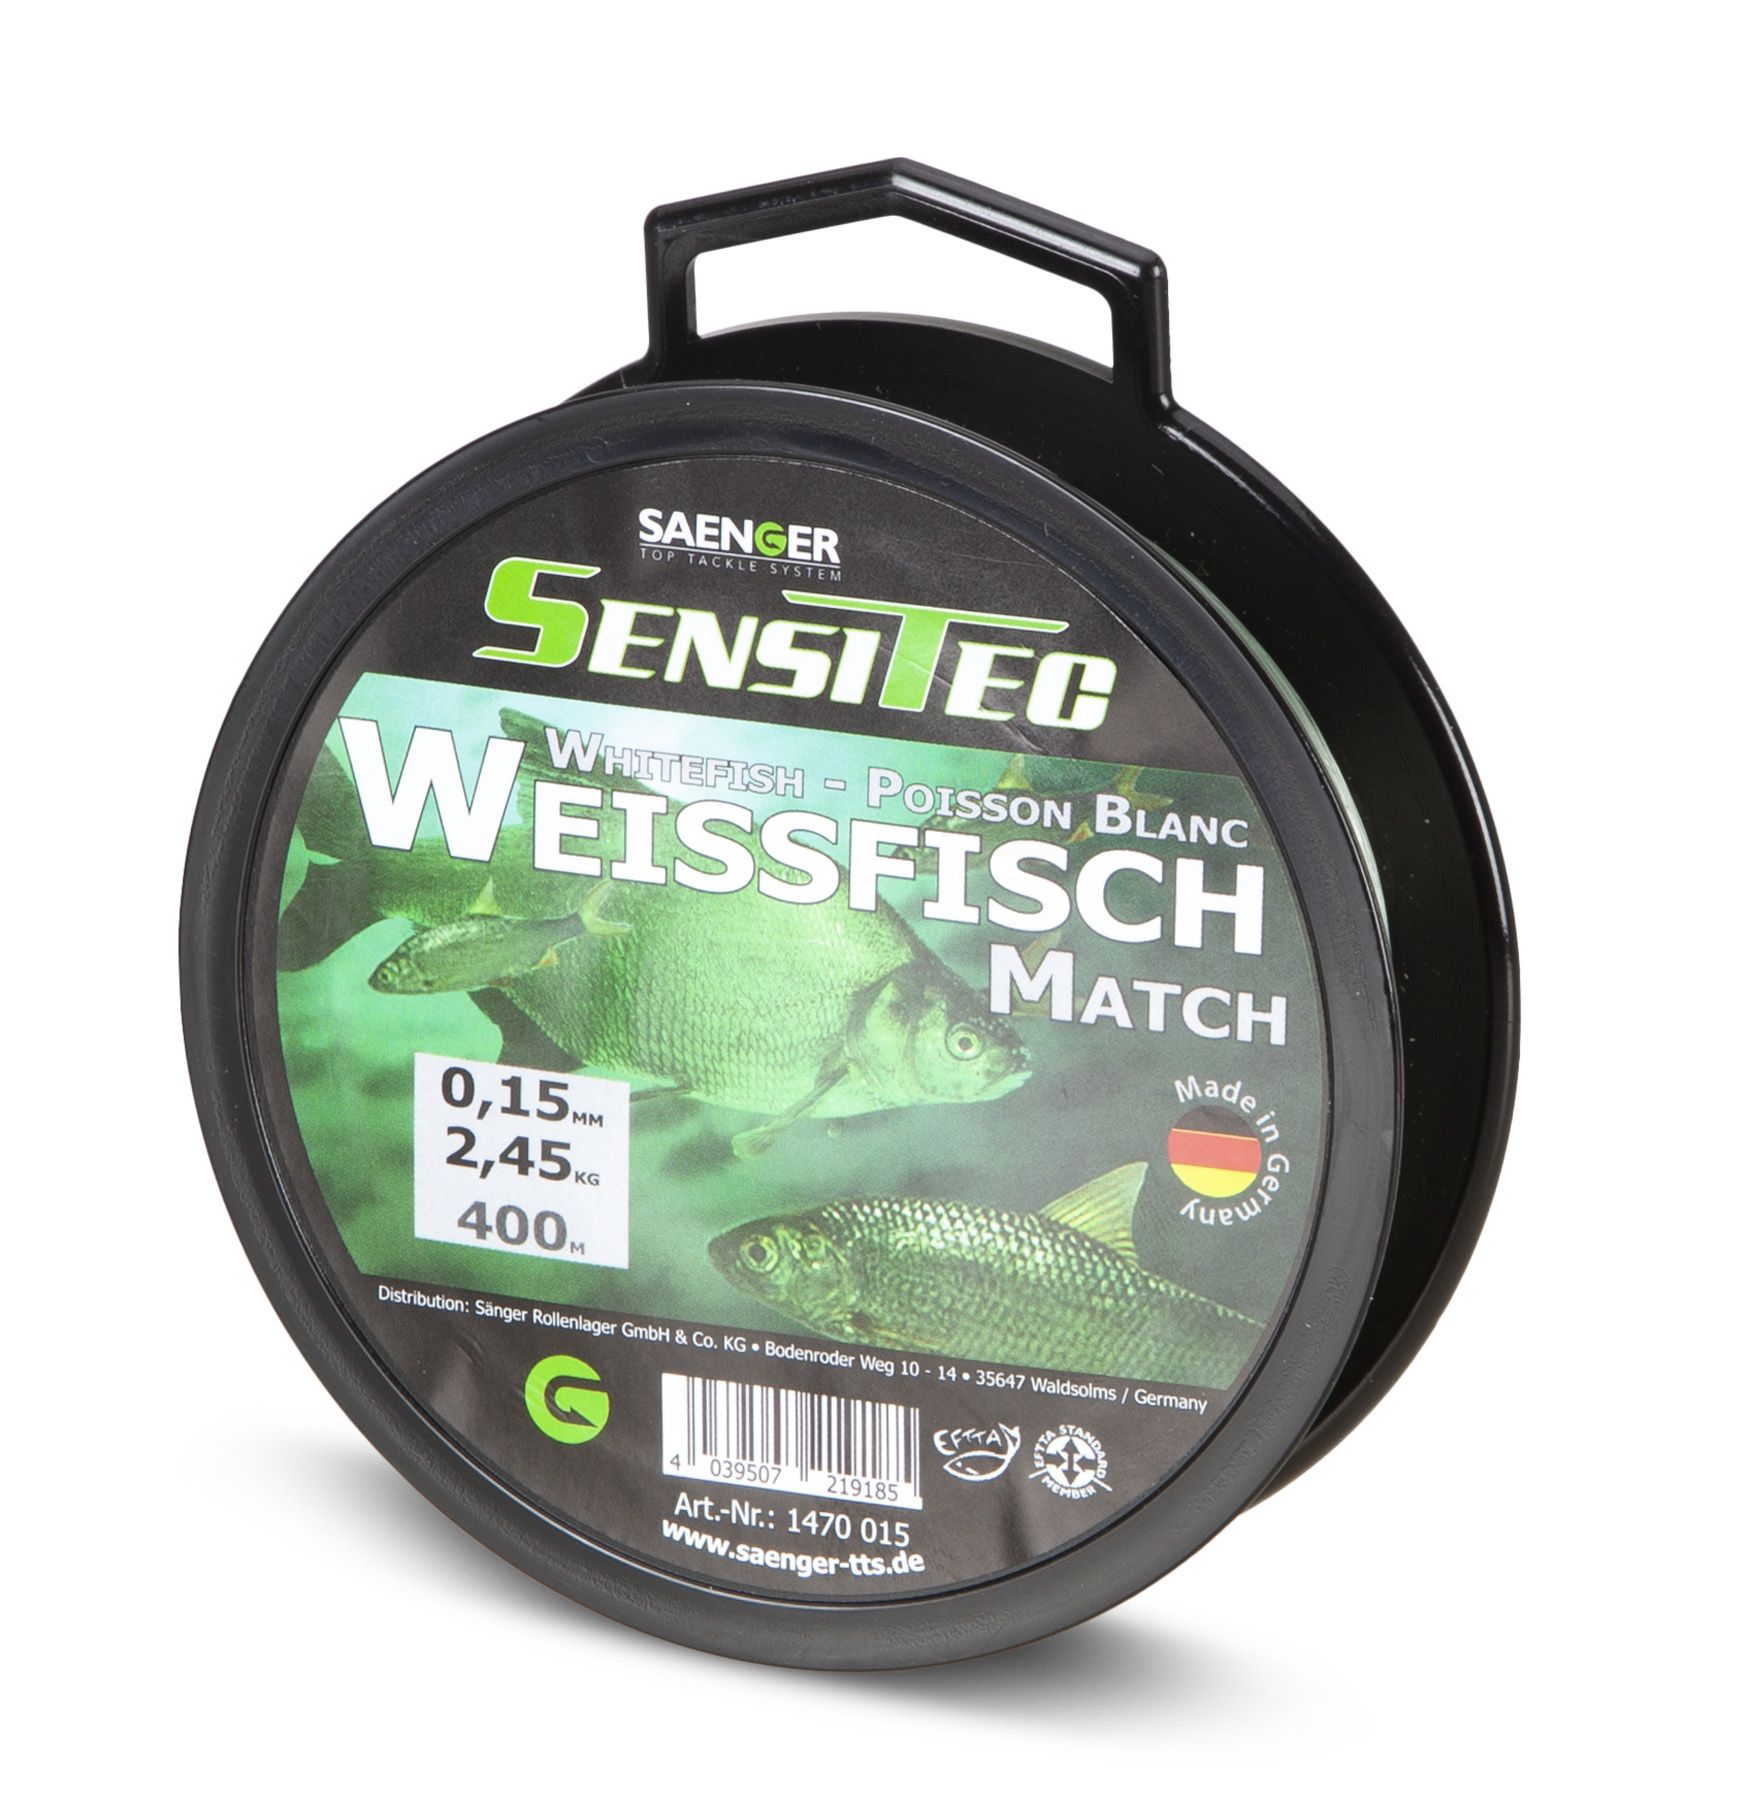 Sensitec Match za bijelu ribu - limpid green 400m 0,18mm